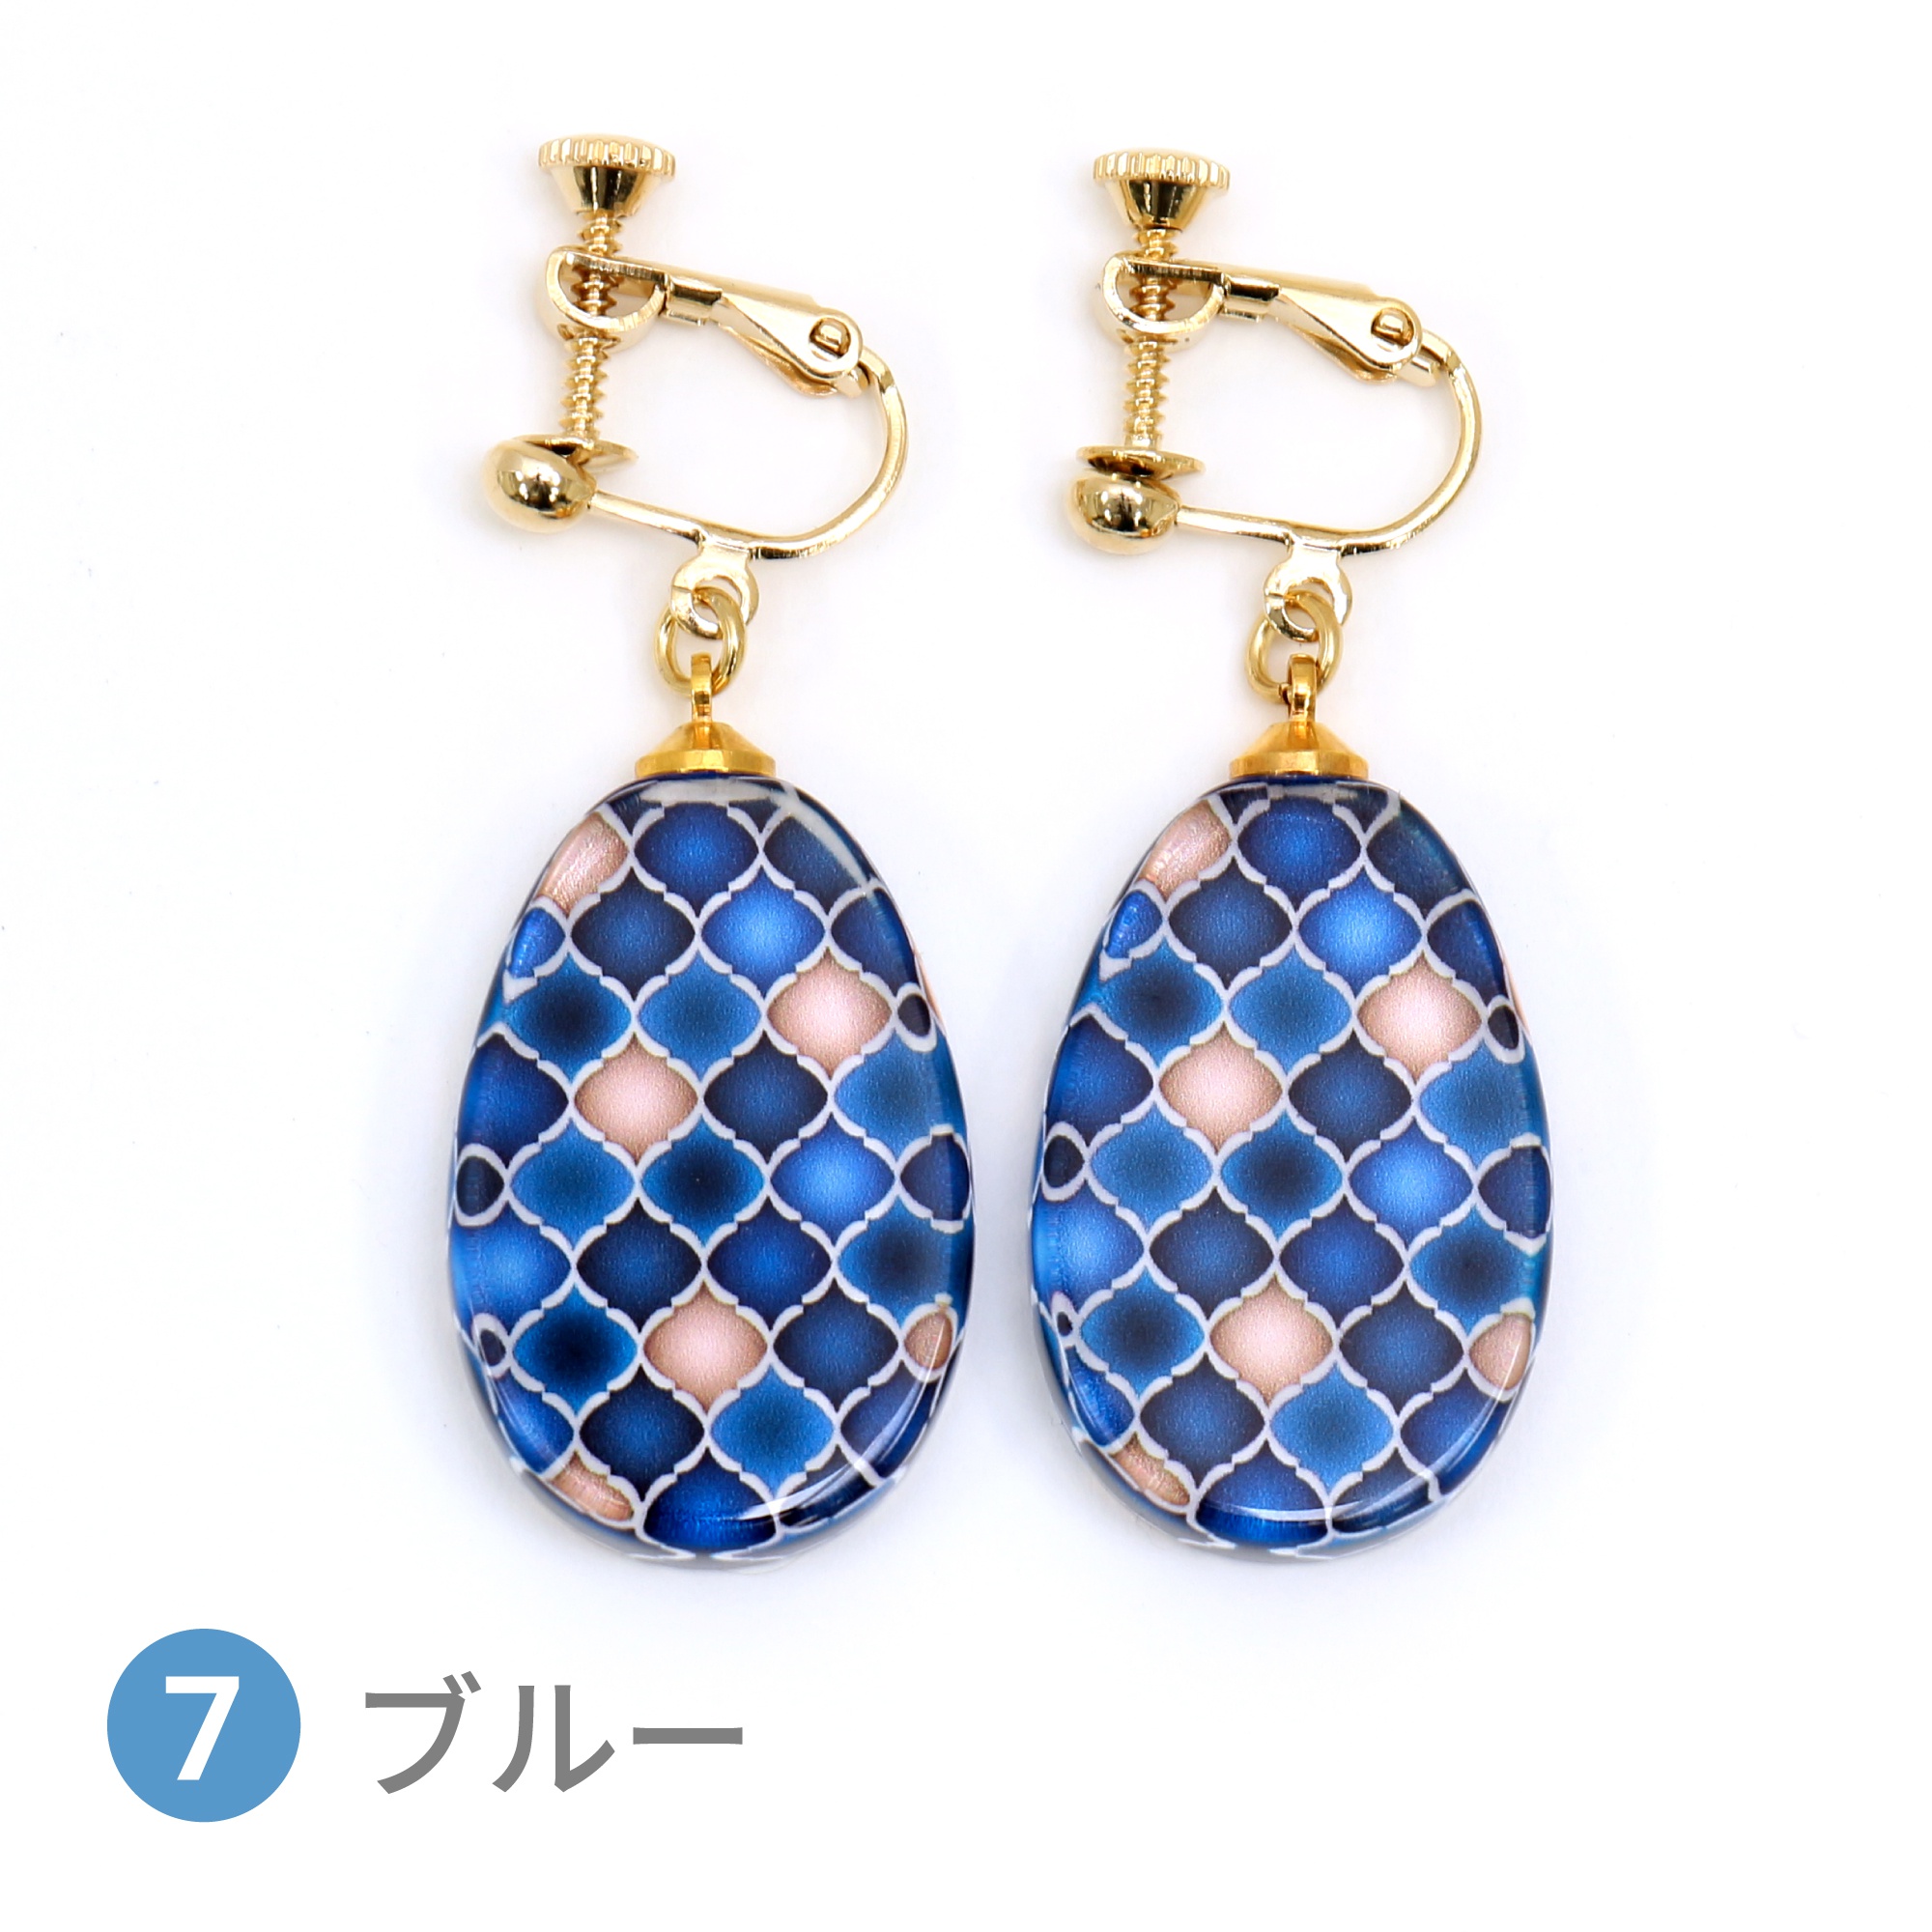 Glass accessories Earring MOROCCAN blue drop shape